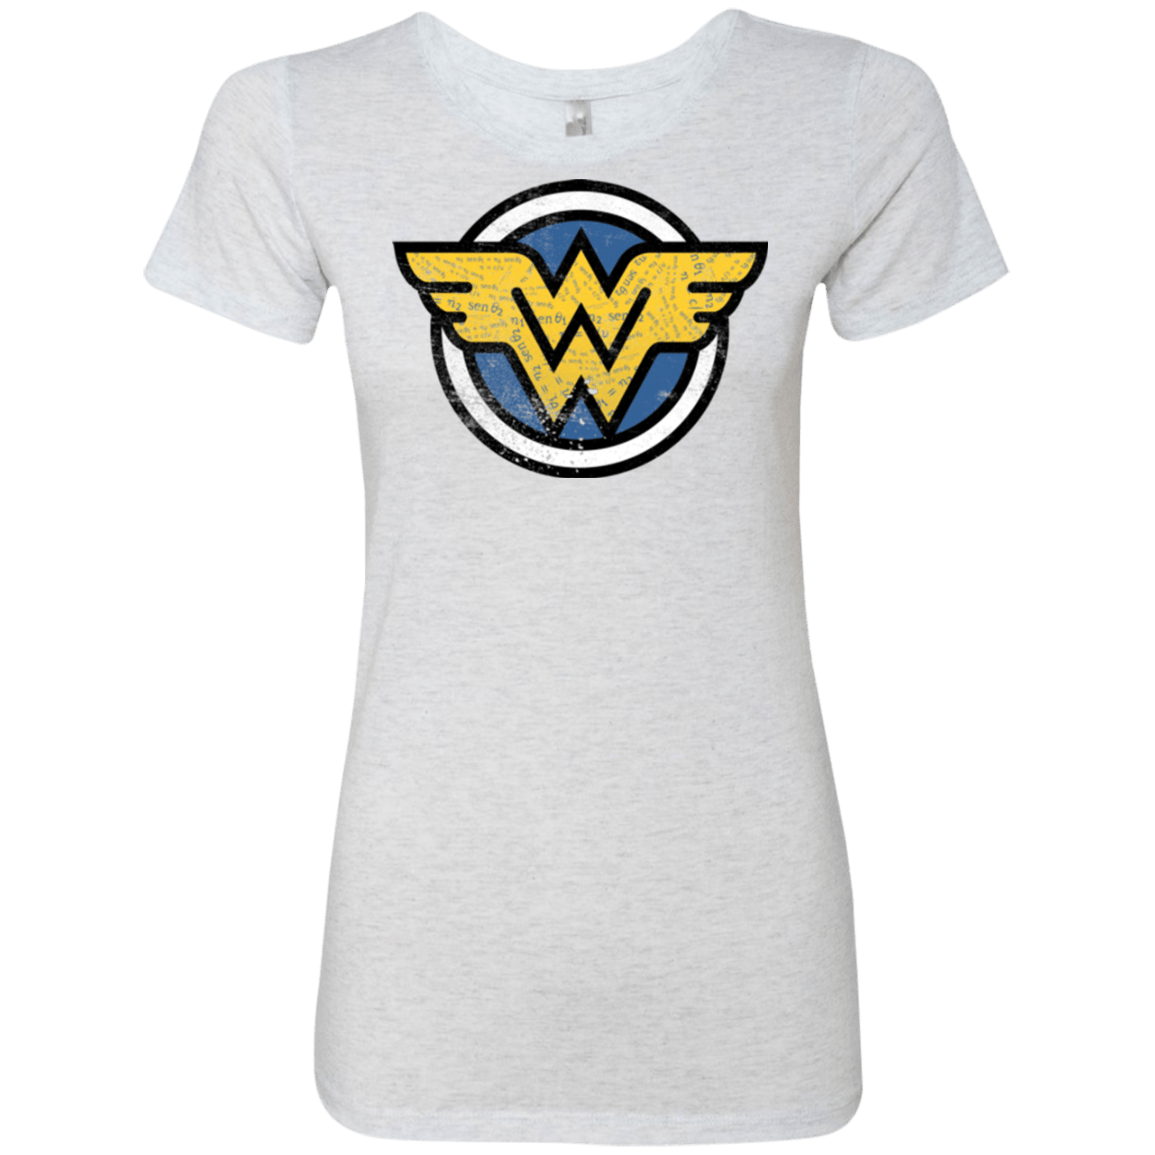 Girl's Wonder Woman This Is My Wonder Woman Costume T-shirt - White - Large  : Target